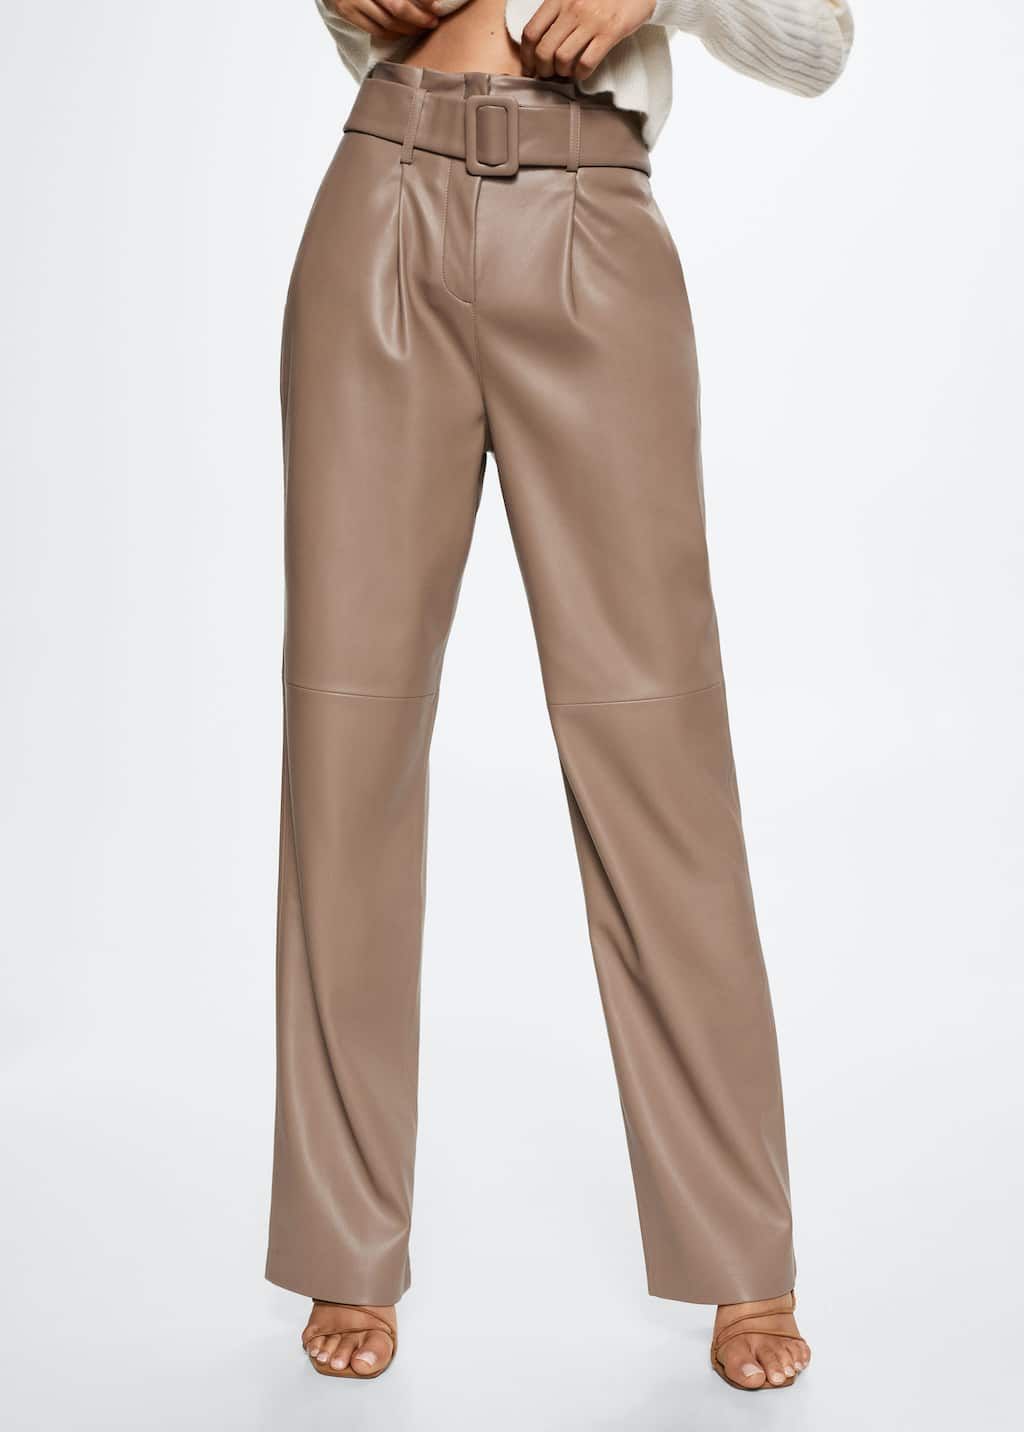 Mango Apple Trousers | £45.99 | Mirror Online